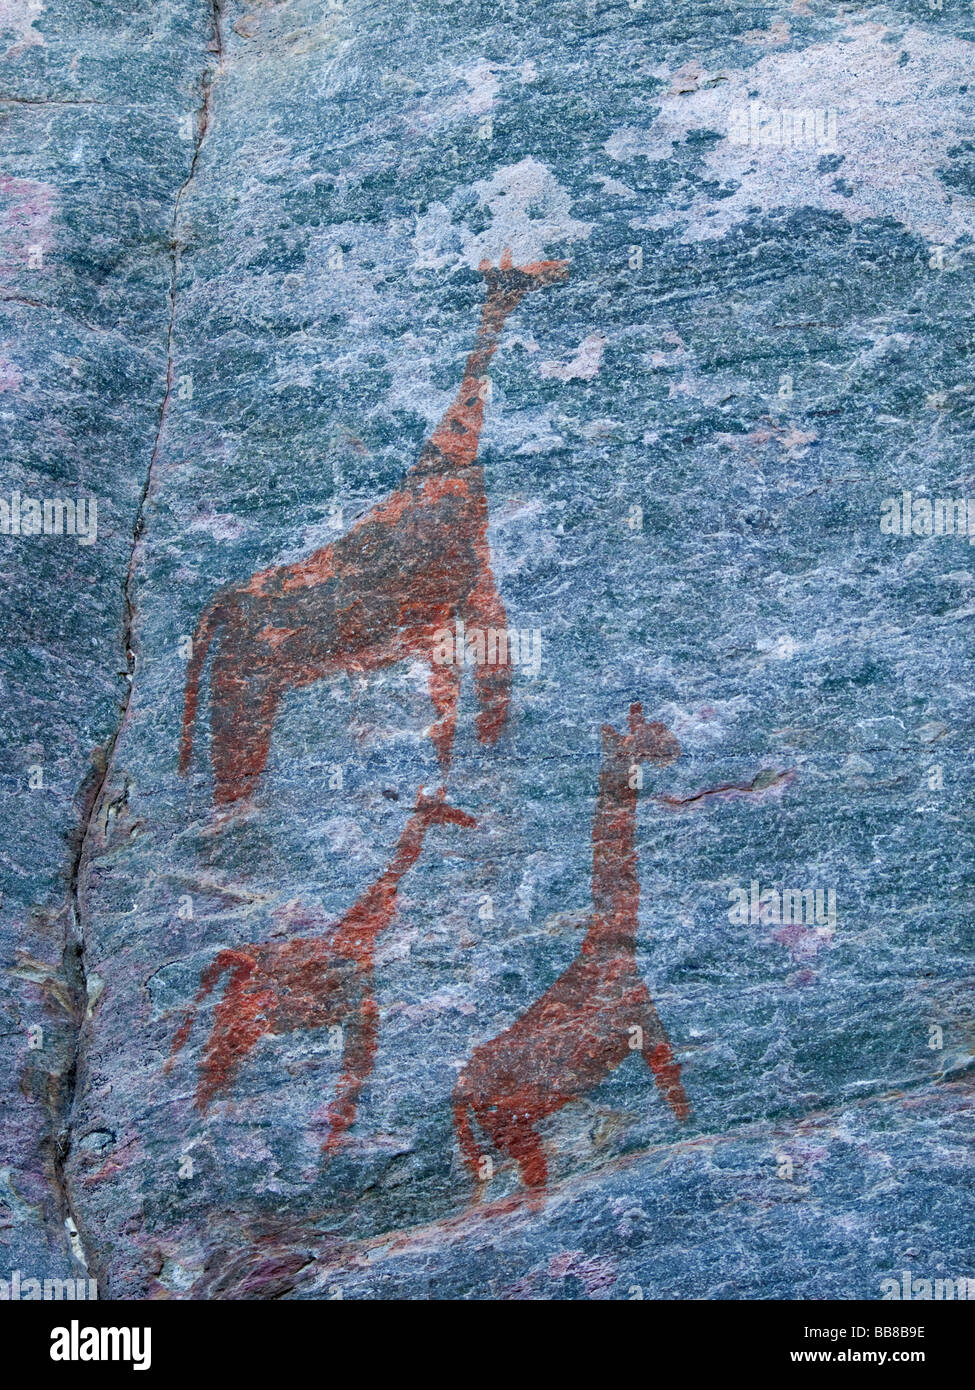 Pinturas rupestres de jirafas en el Rhino-Trail del sitio del Patrimonio Mundial de la UNESCO, Tsodilo Hills, Botswana, África Foto de stock